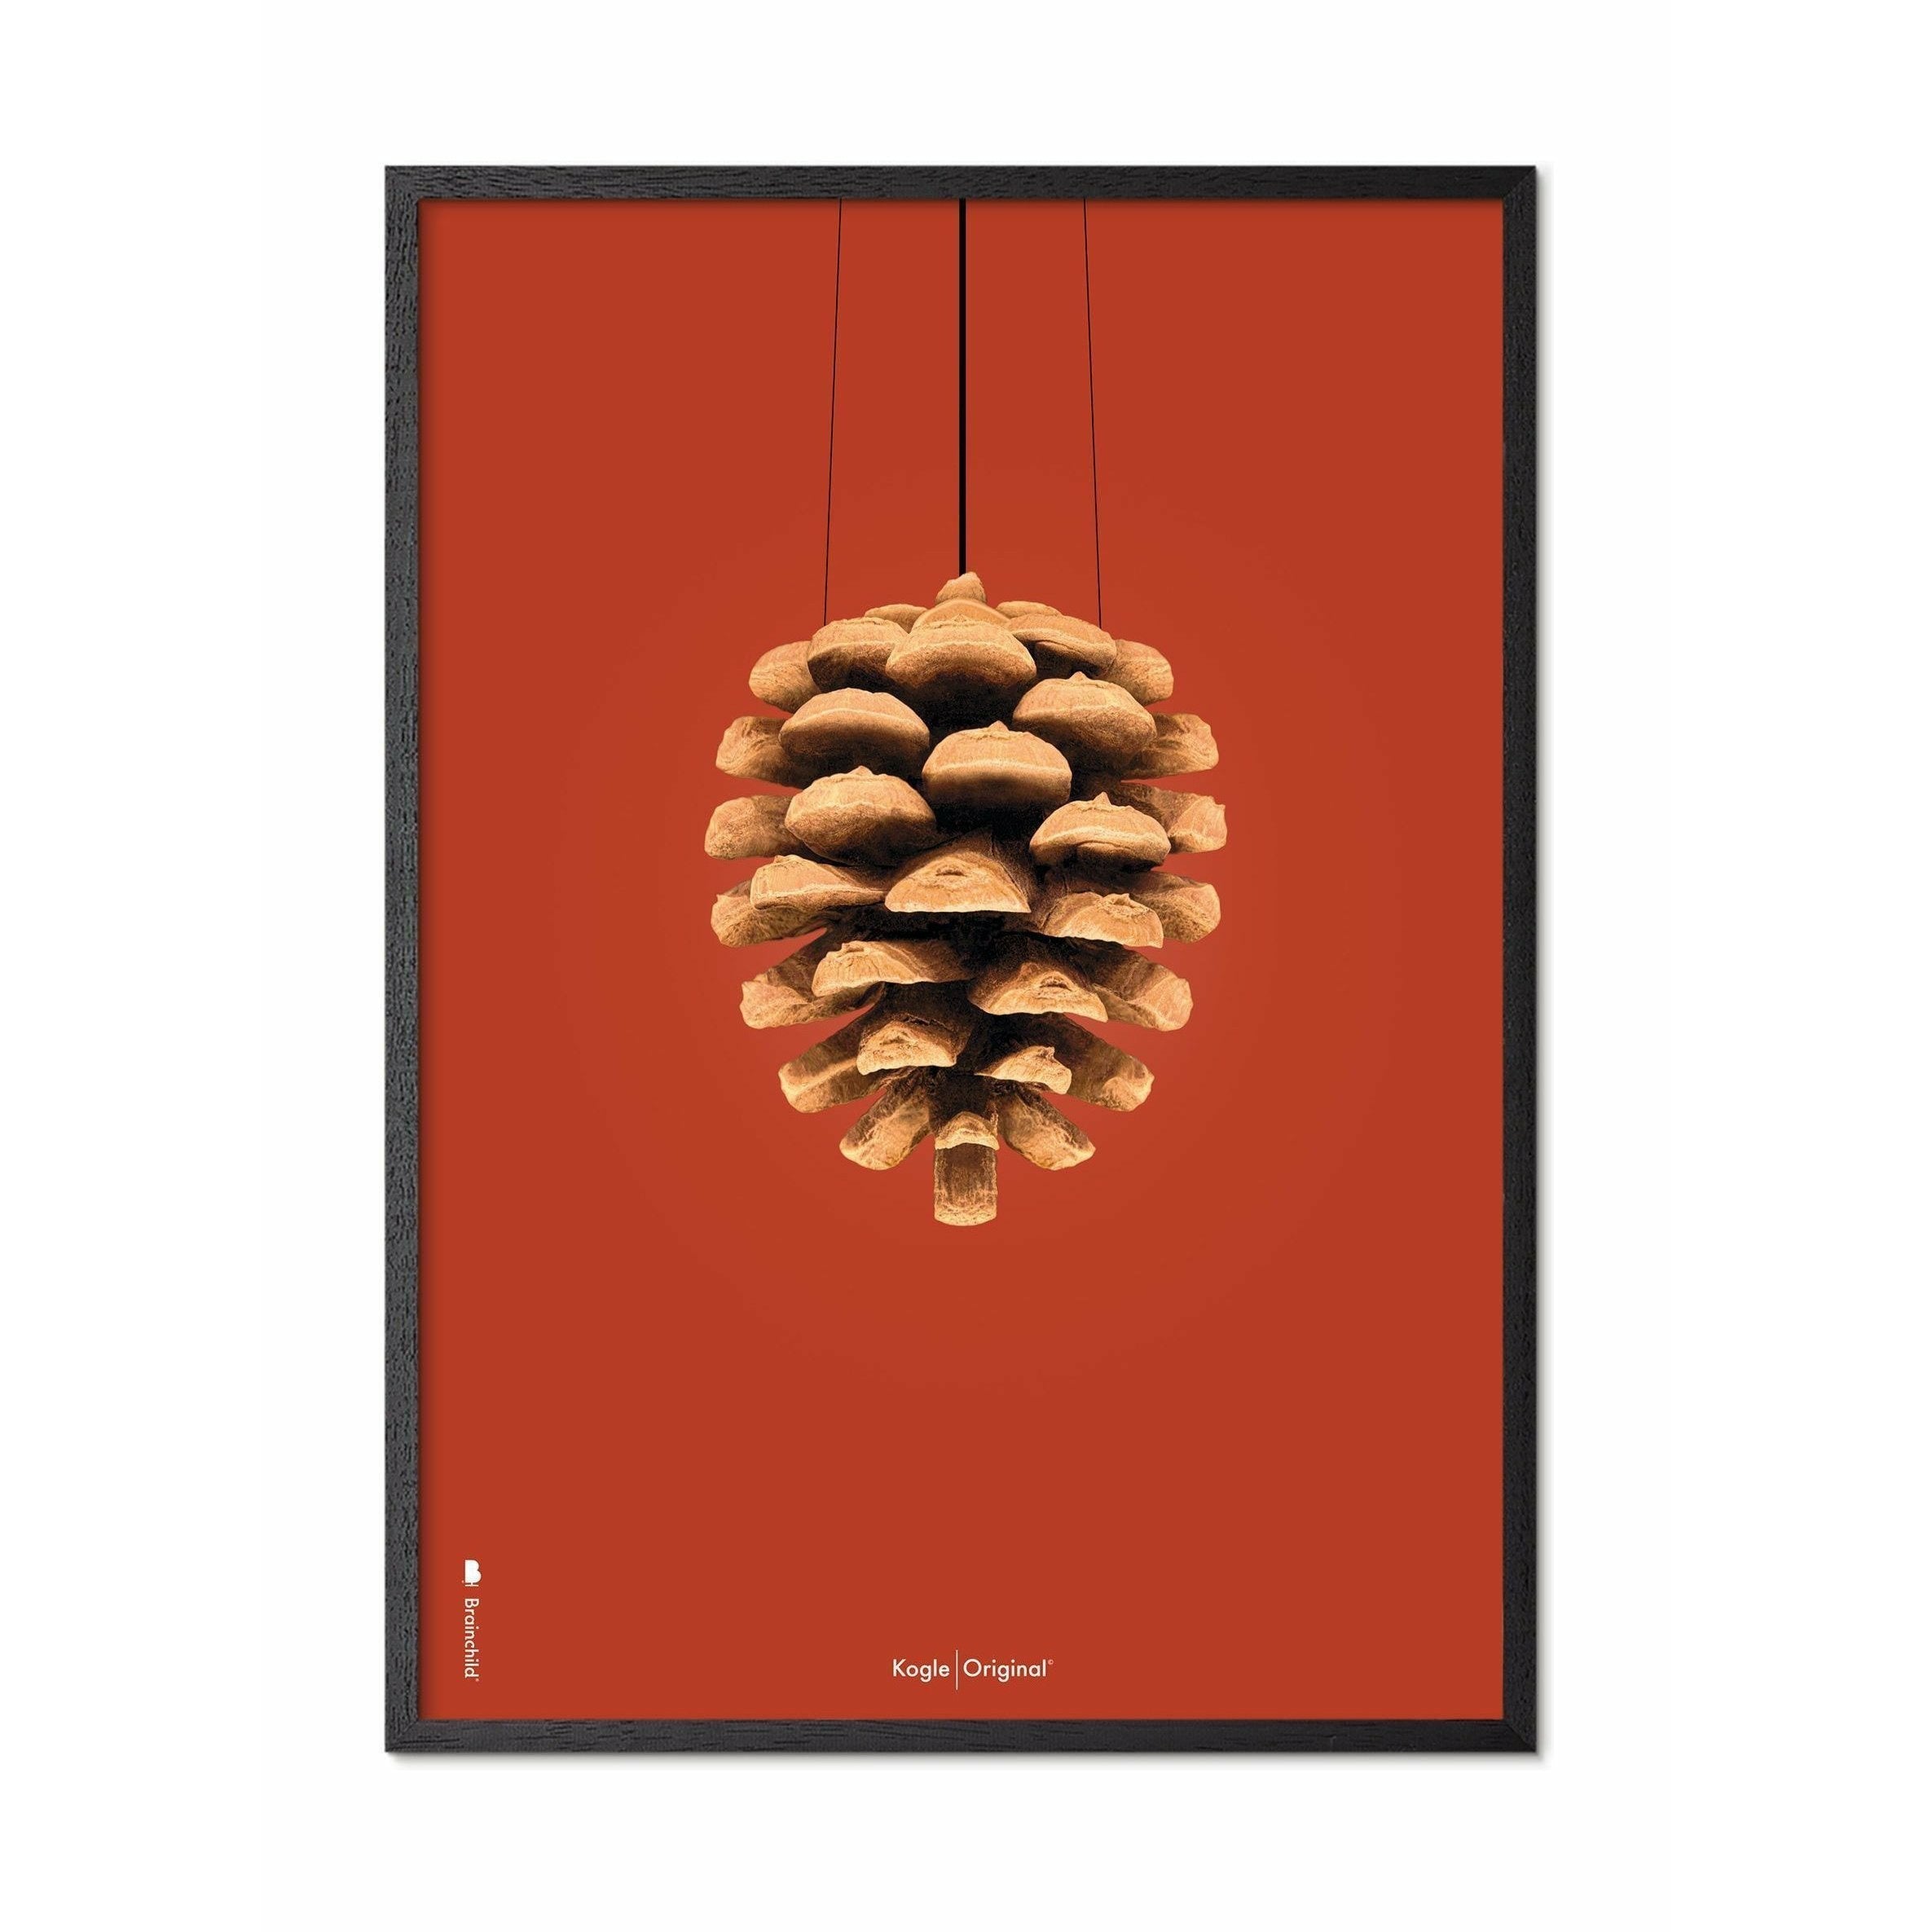 Póster clásico de cono de pino de creación, marco en madera lacada negra de 30x40 cm, fondo rojo